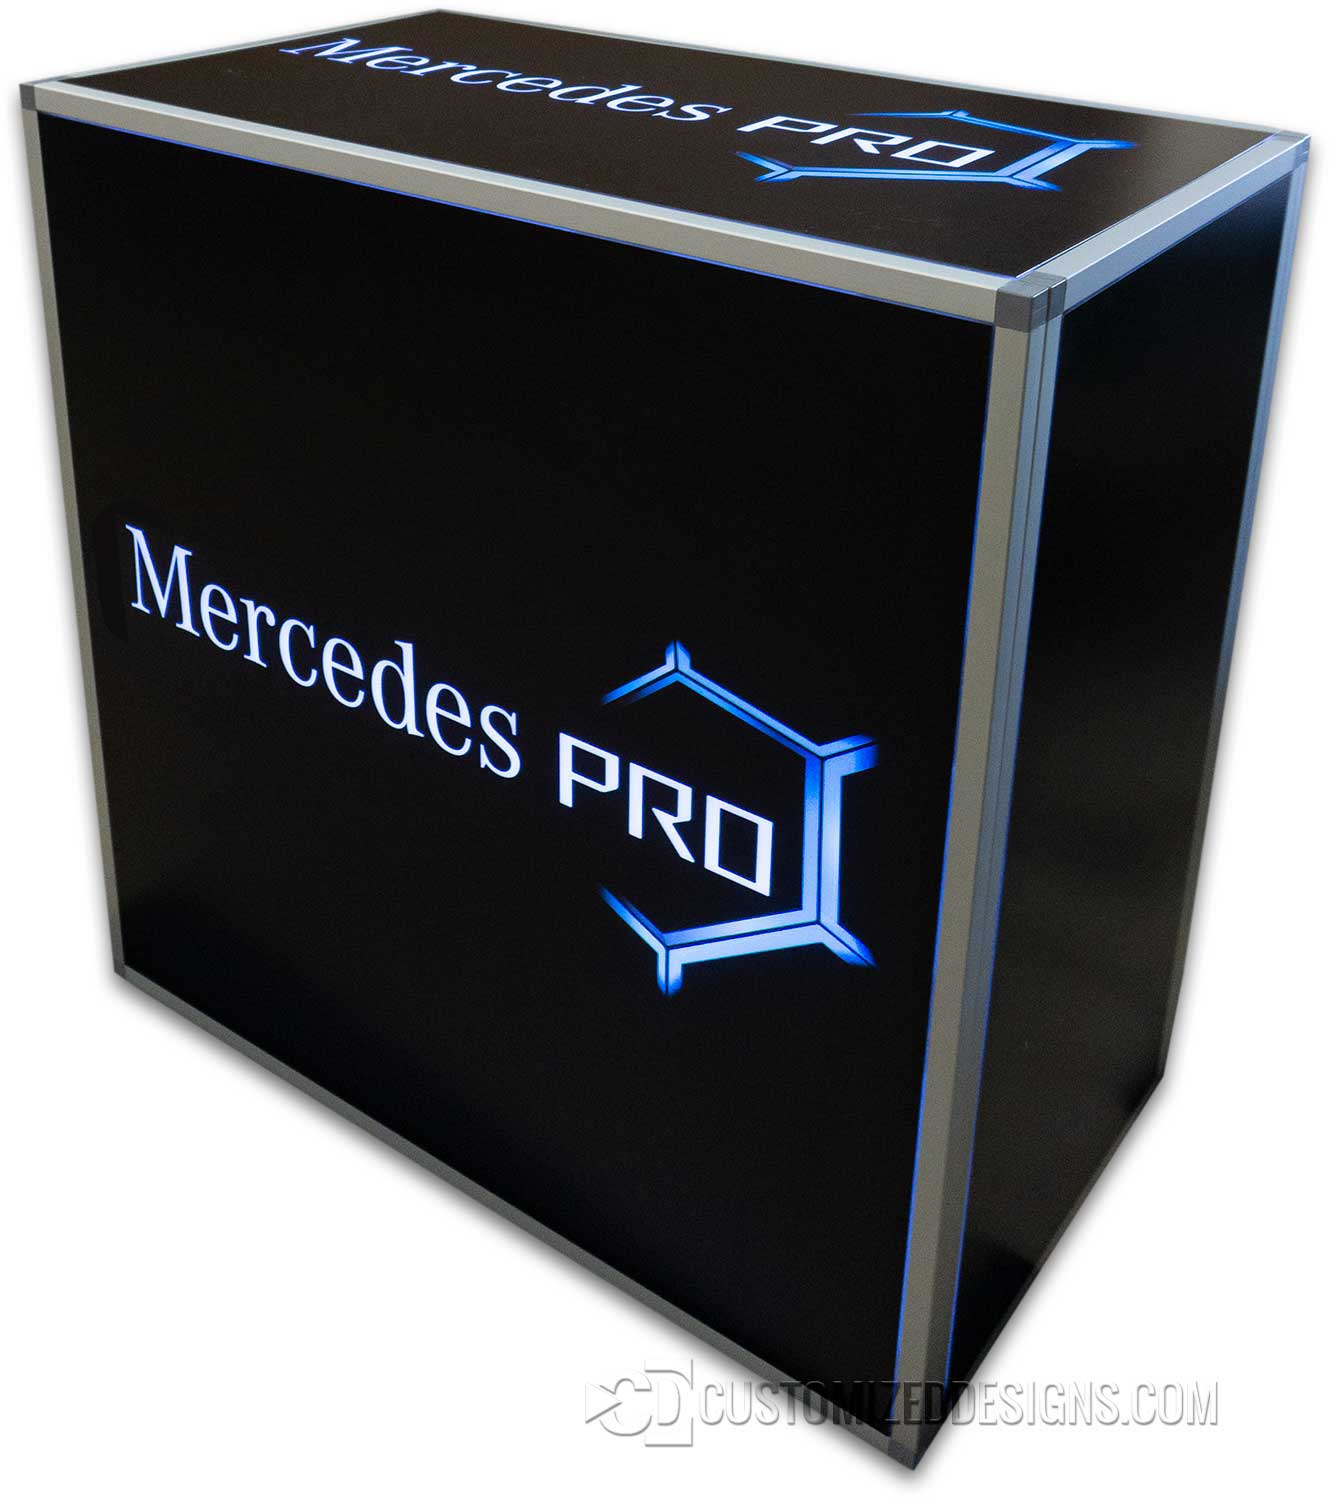 42x24x42 Element Modular Table - Mercedes Benz Logo